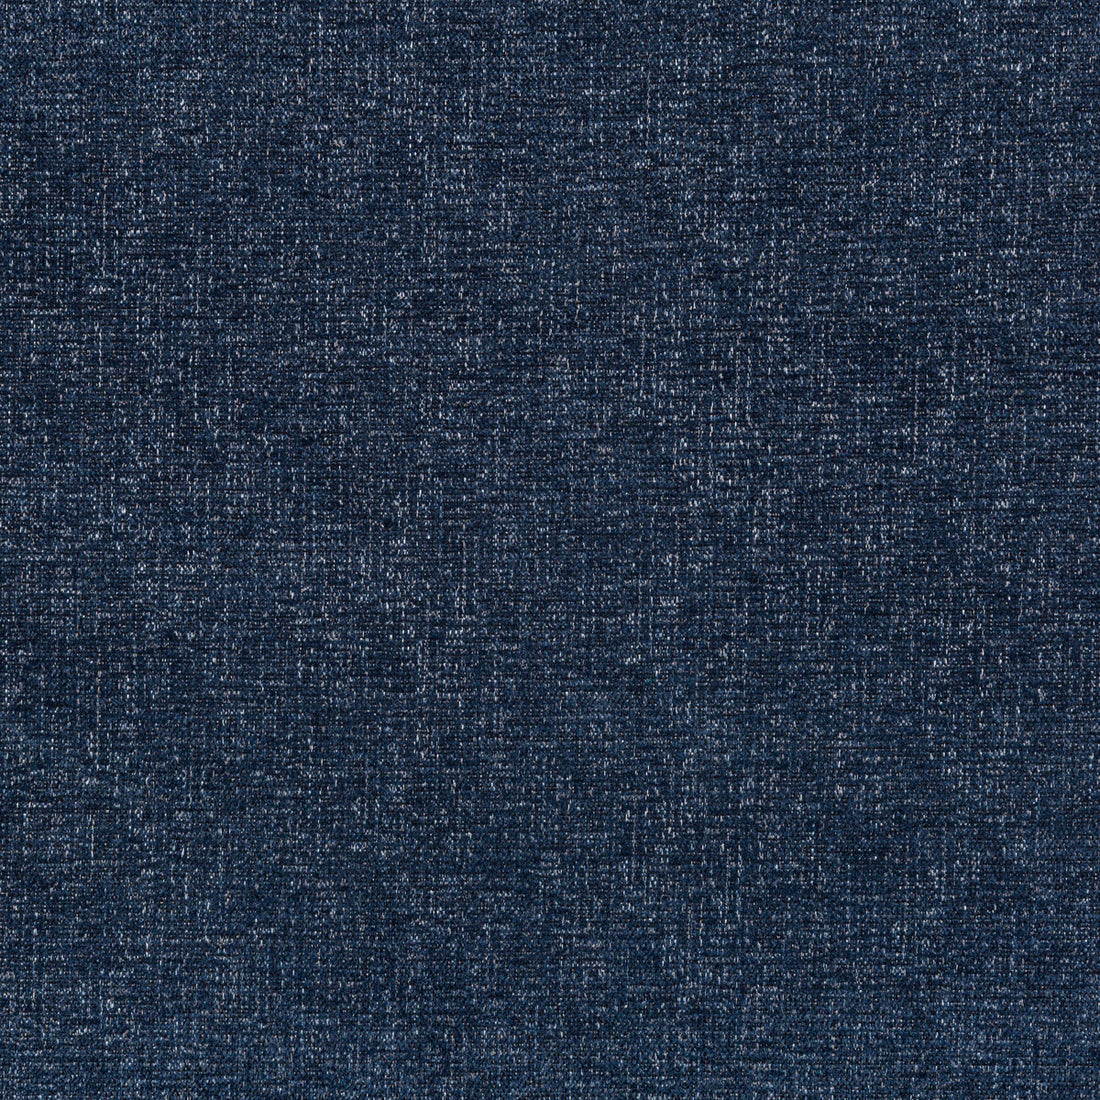 Kravet Smart fabric in 35927-50 color - pattern 35927.50.0 - by Kravet Smart in the Performance Kravetarmor collection